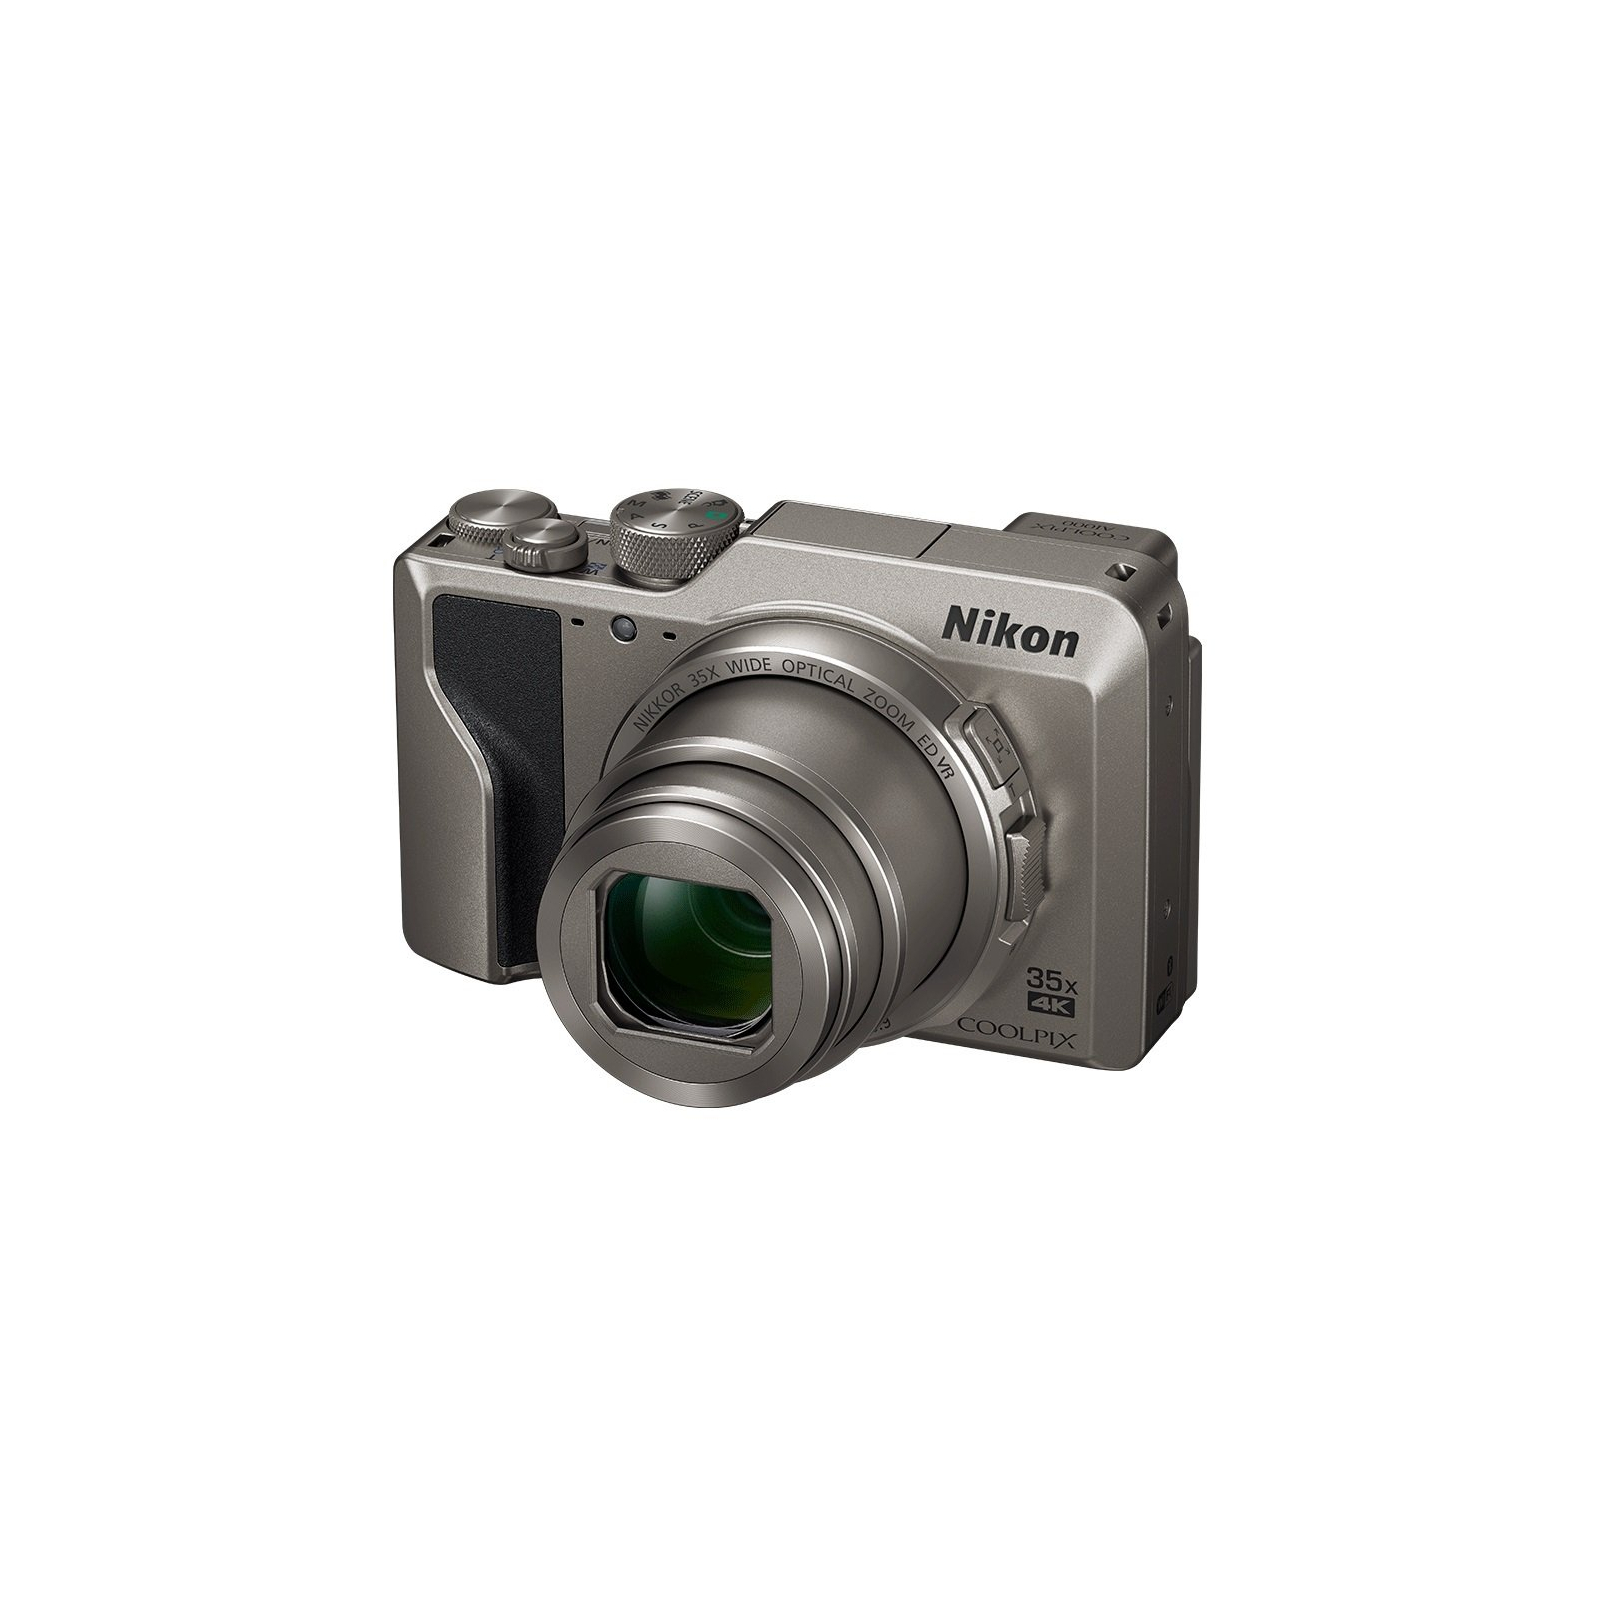 Цифровой фотоаппарат Nikon Coolpix A1000 Silver (VQA081EA) изображение 2